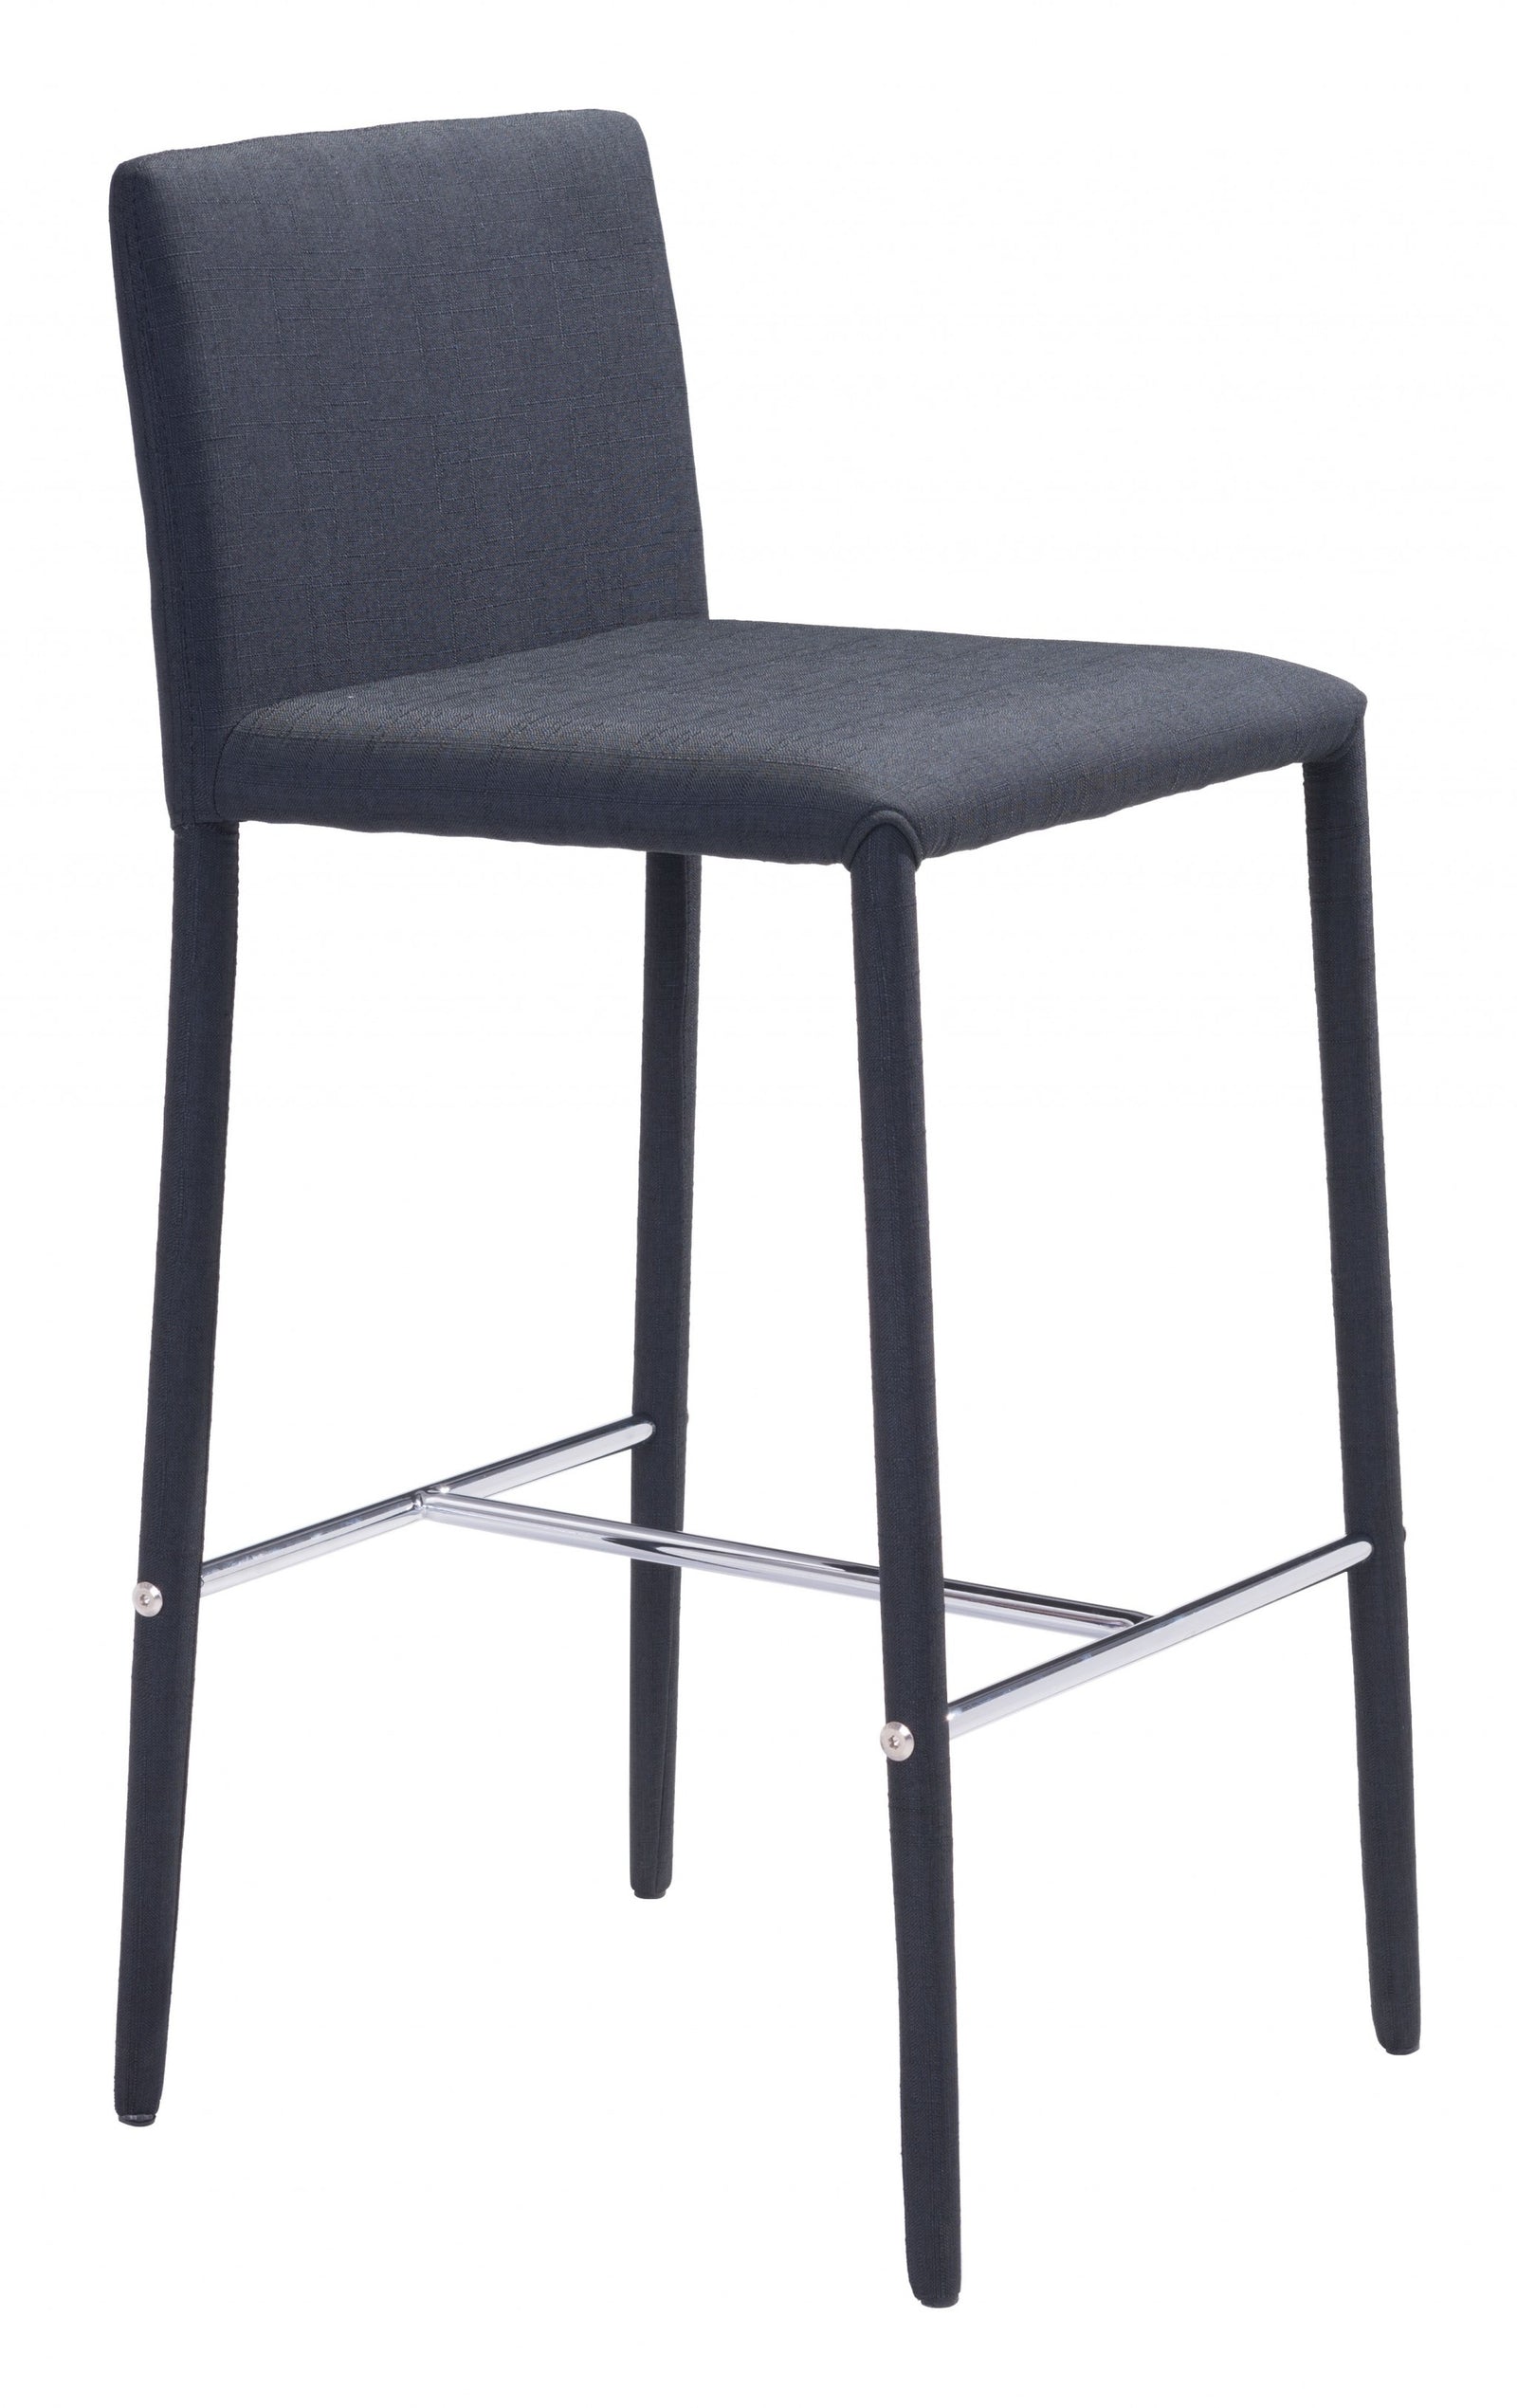 Set of Two Black Restaurant Quality Sleek Bar Chairs